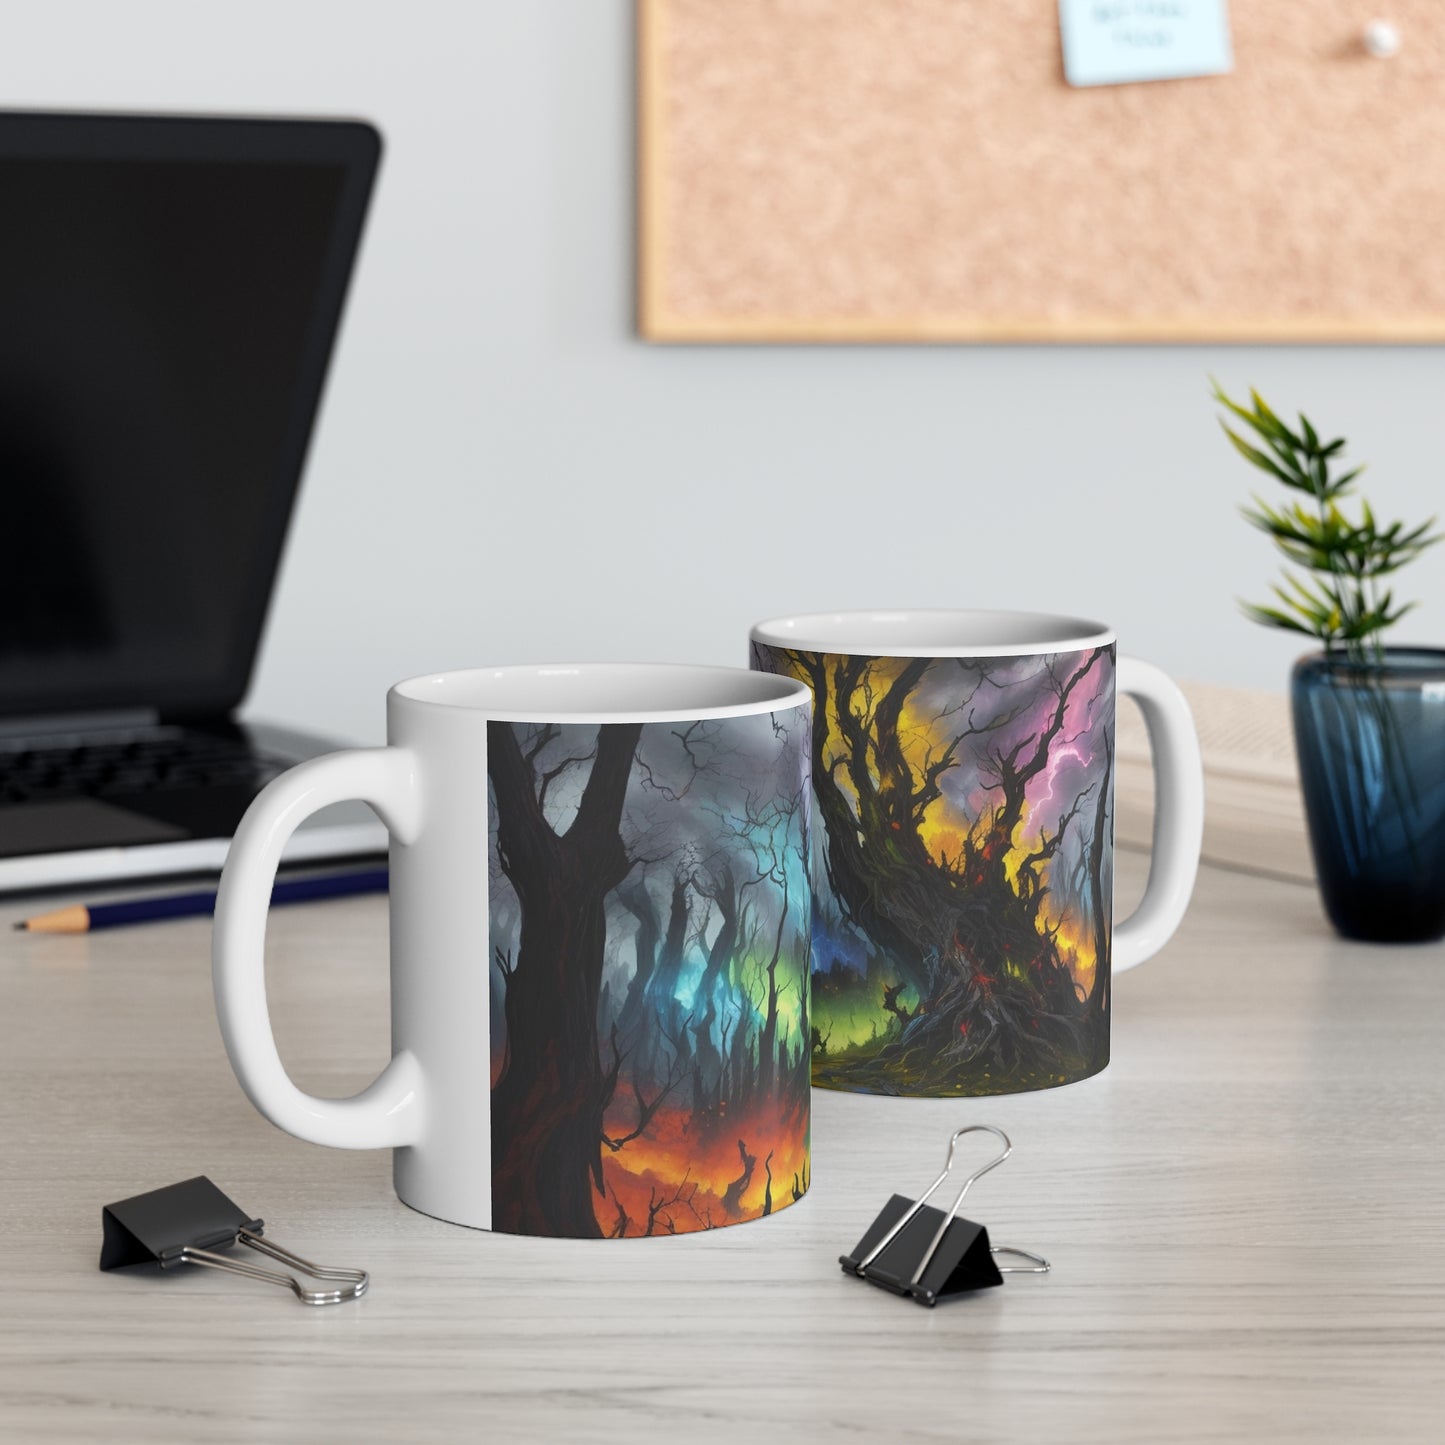 Dying Trees Colourful Lightning Mug - Ceramic Coffee Mug 11oz